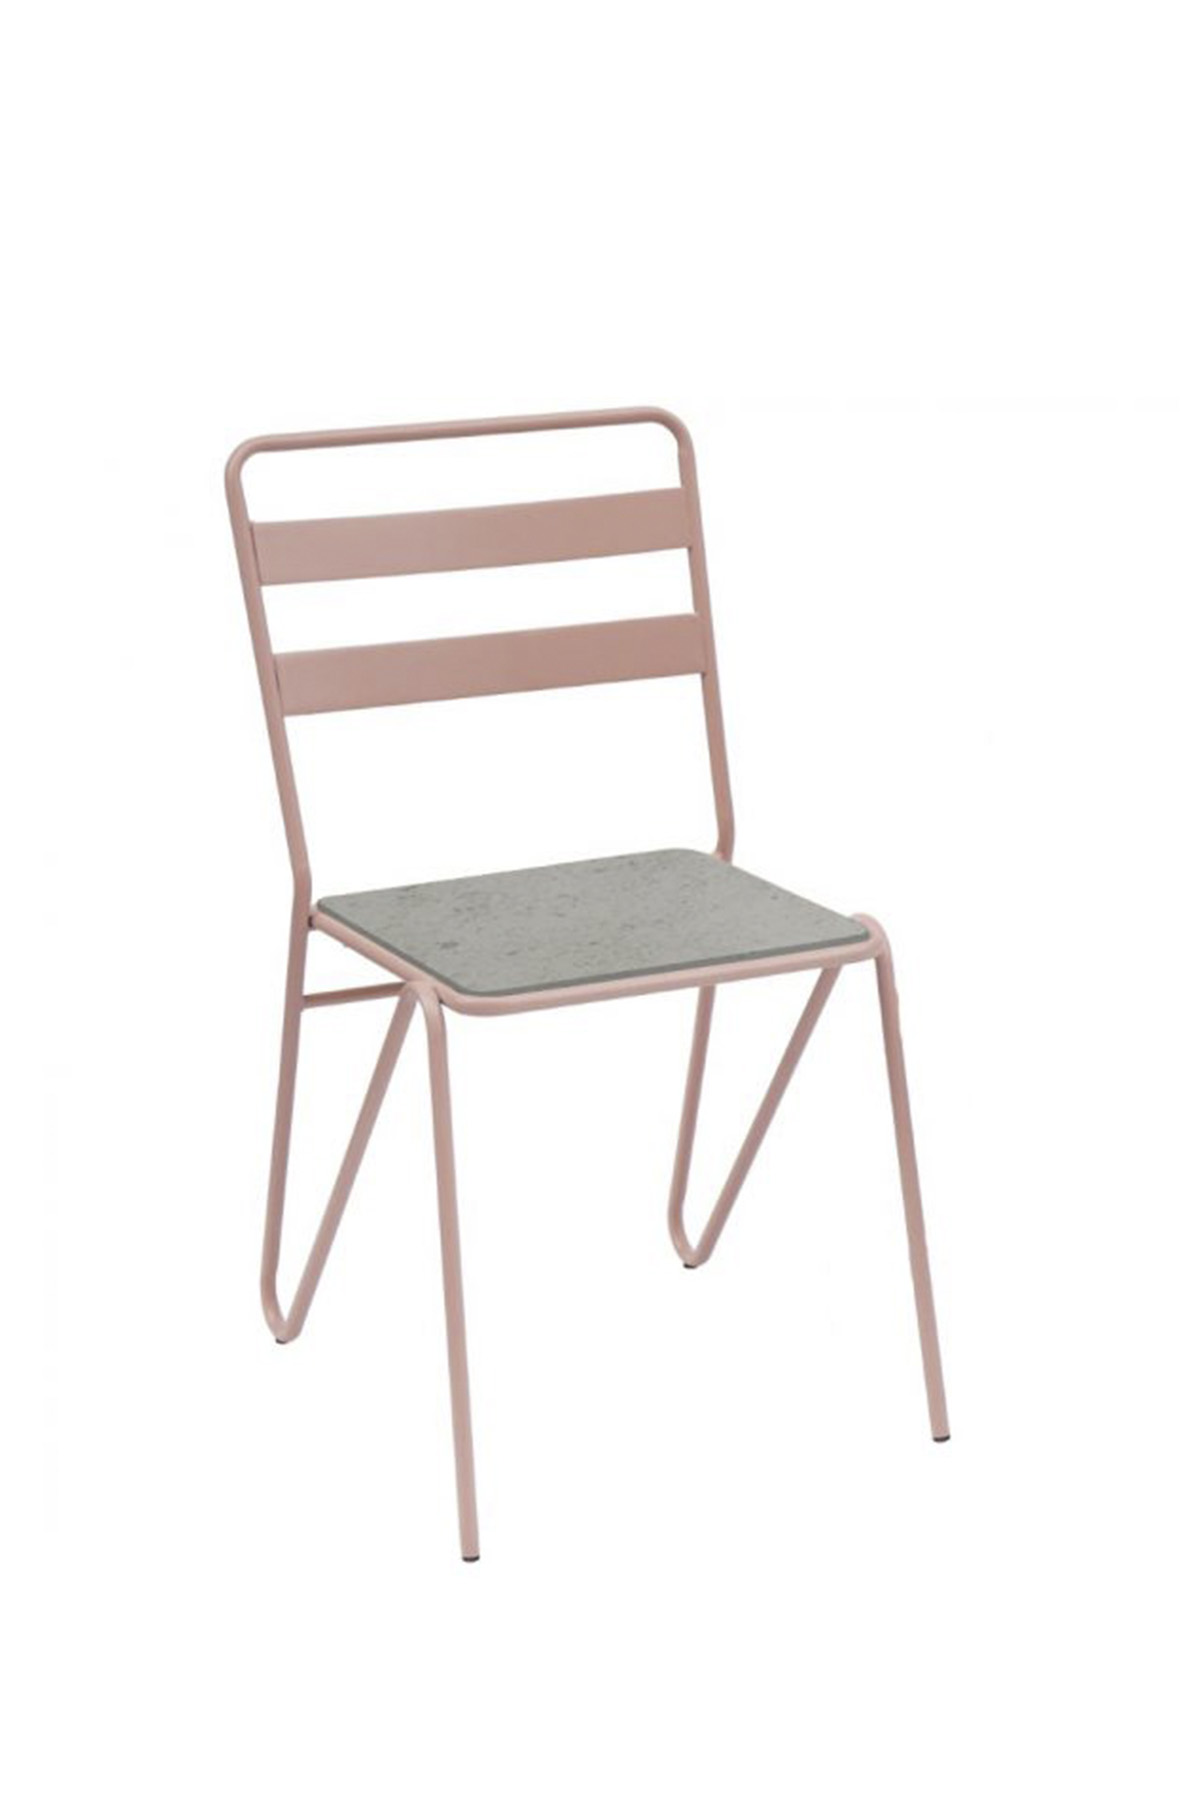  Lila Chair,  Price $250   https://noodco.com.au/product/lila-chair/ 